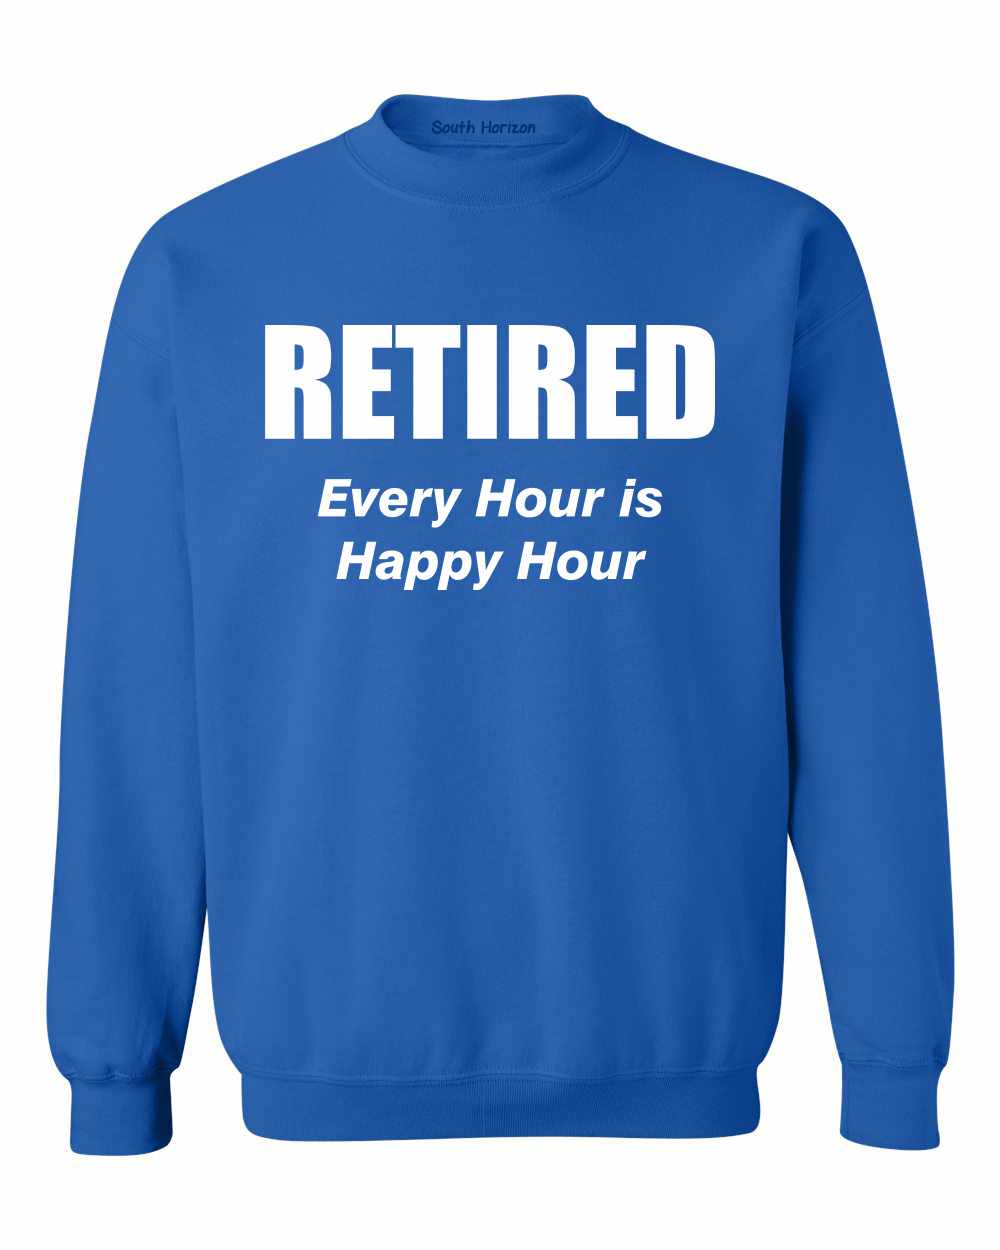 RETIRED, Every Hour Is Happy Hour on SweatShirt